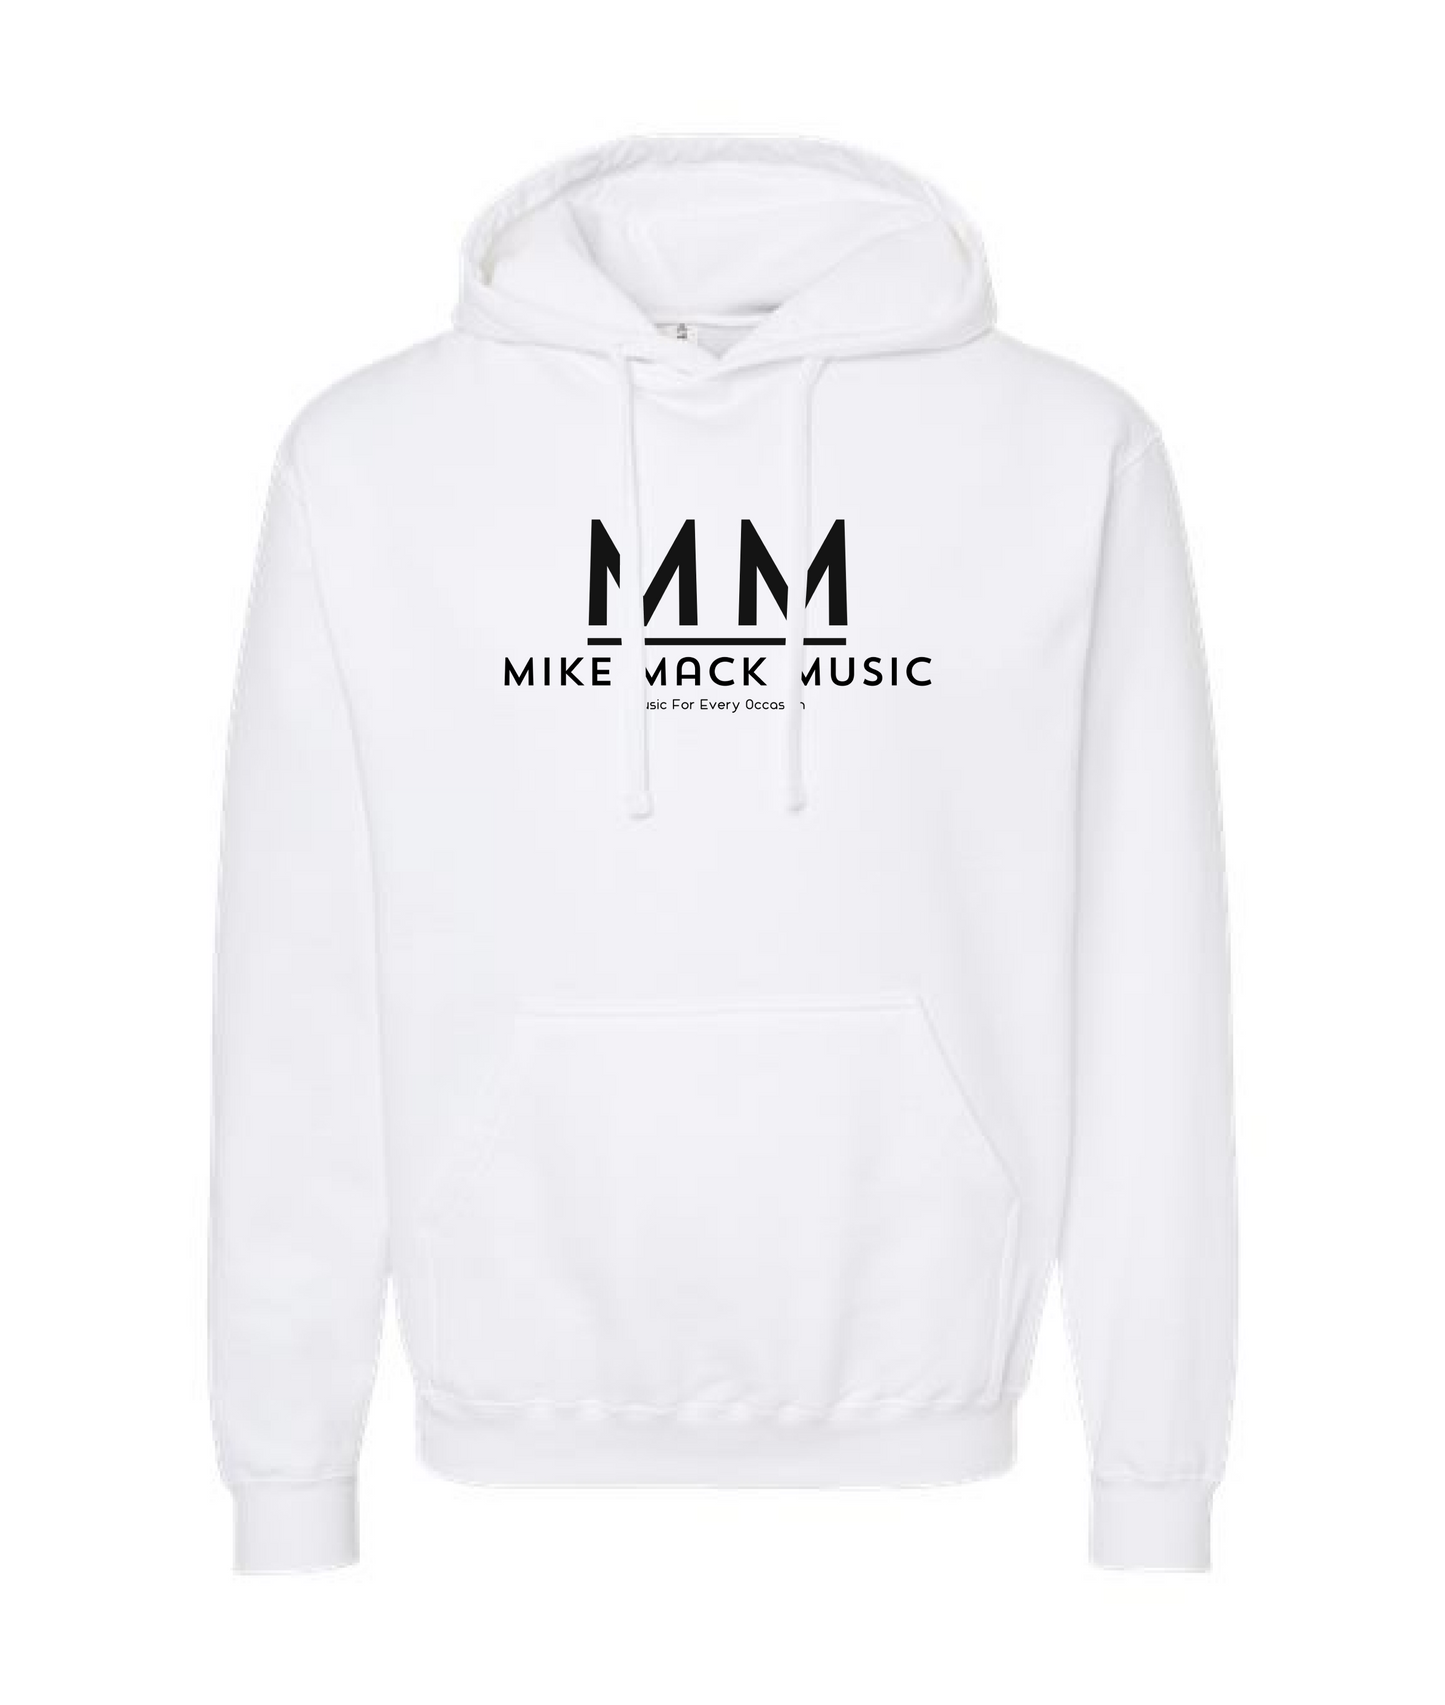 Mike Mack Music - Logo - White Hoodie